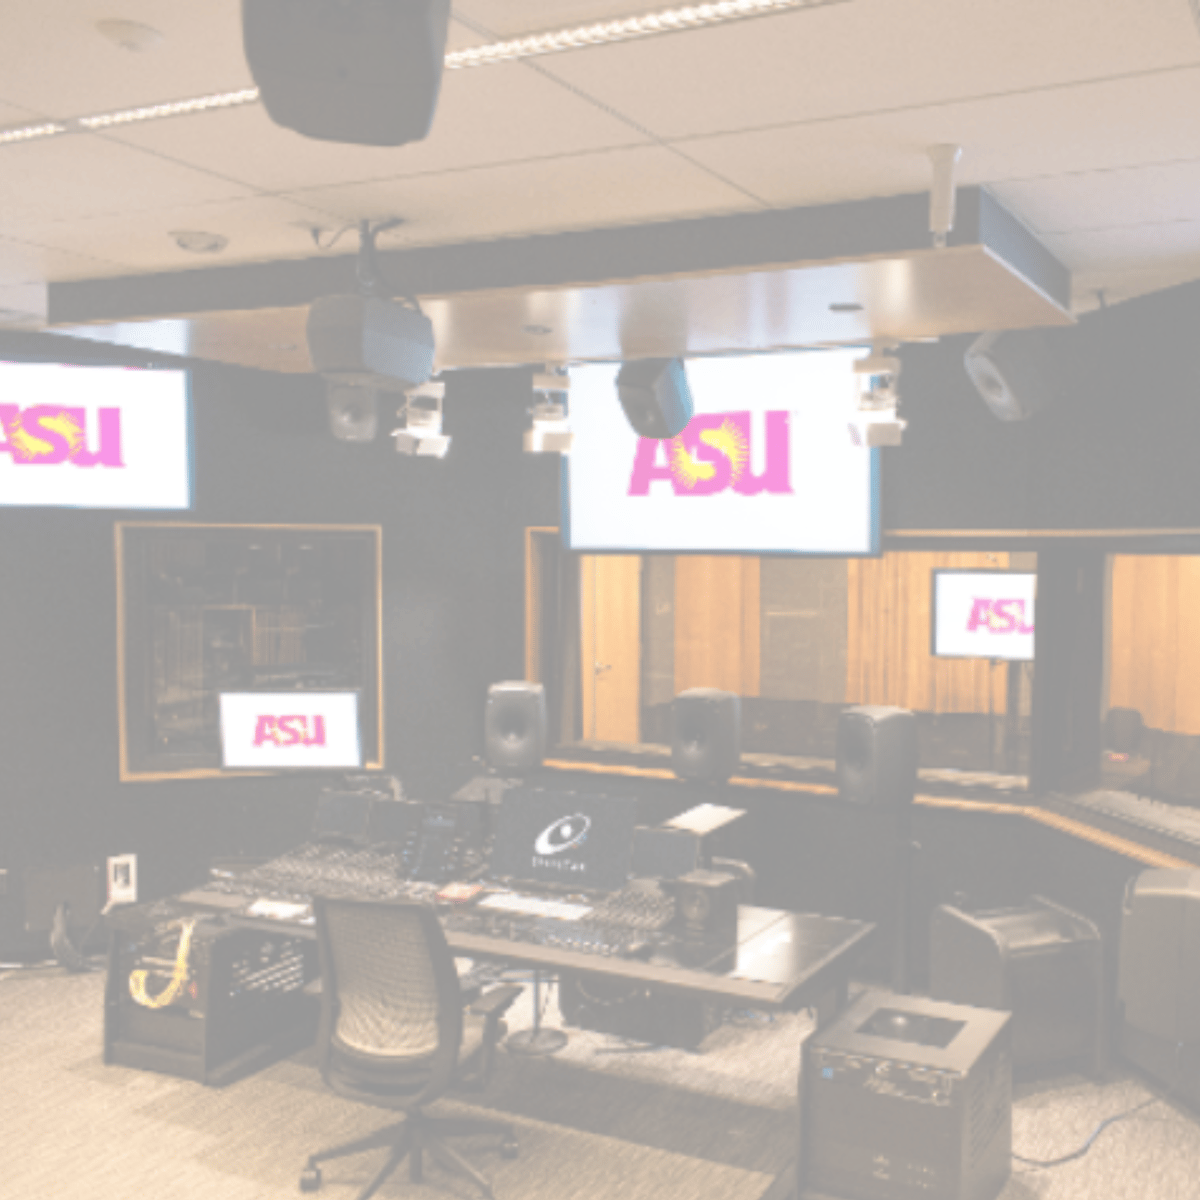 ASU Mix Center